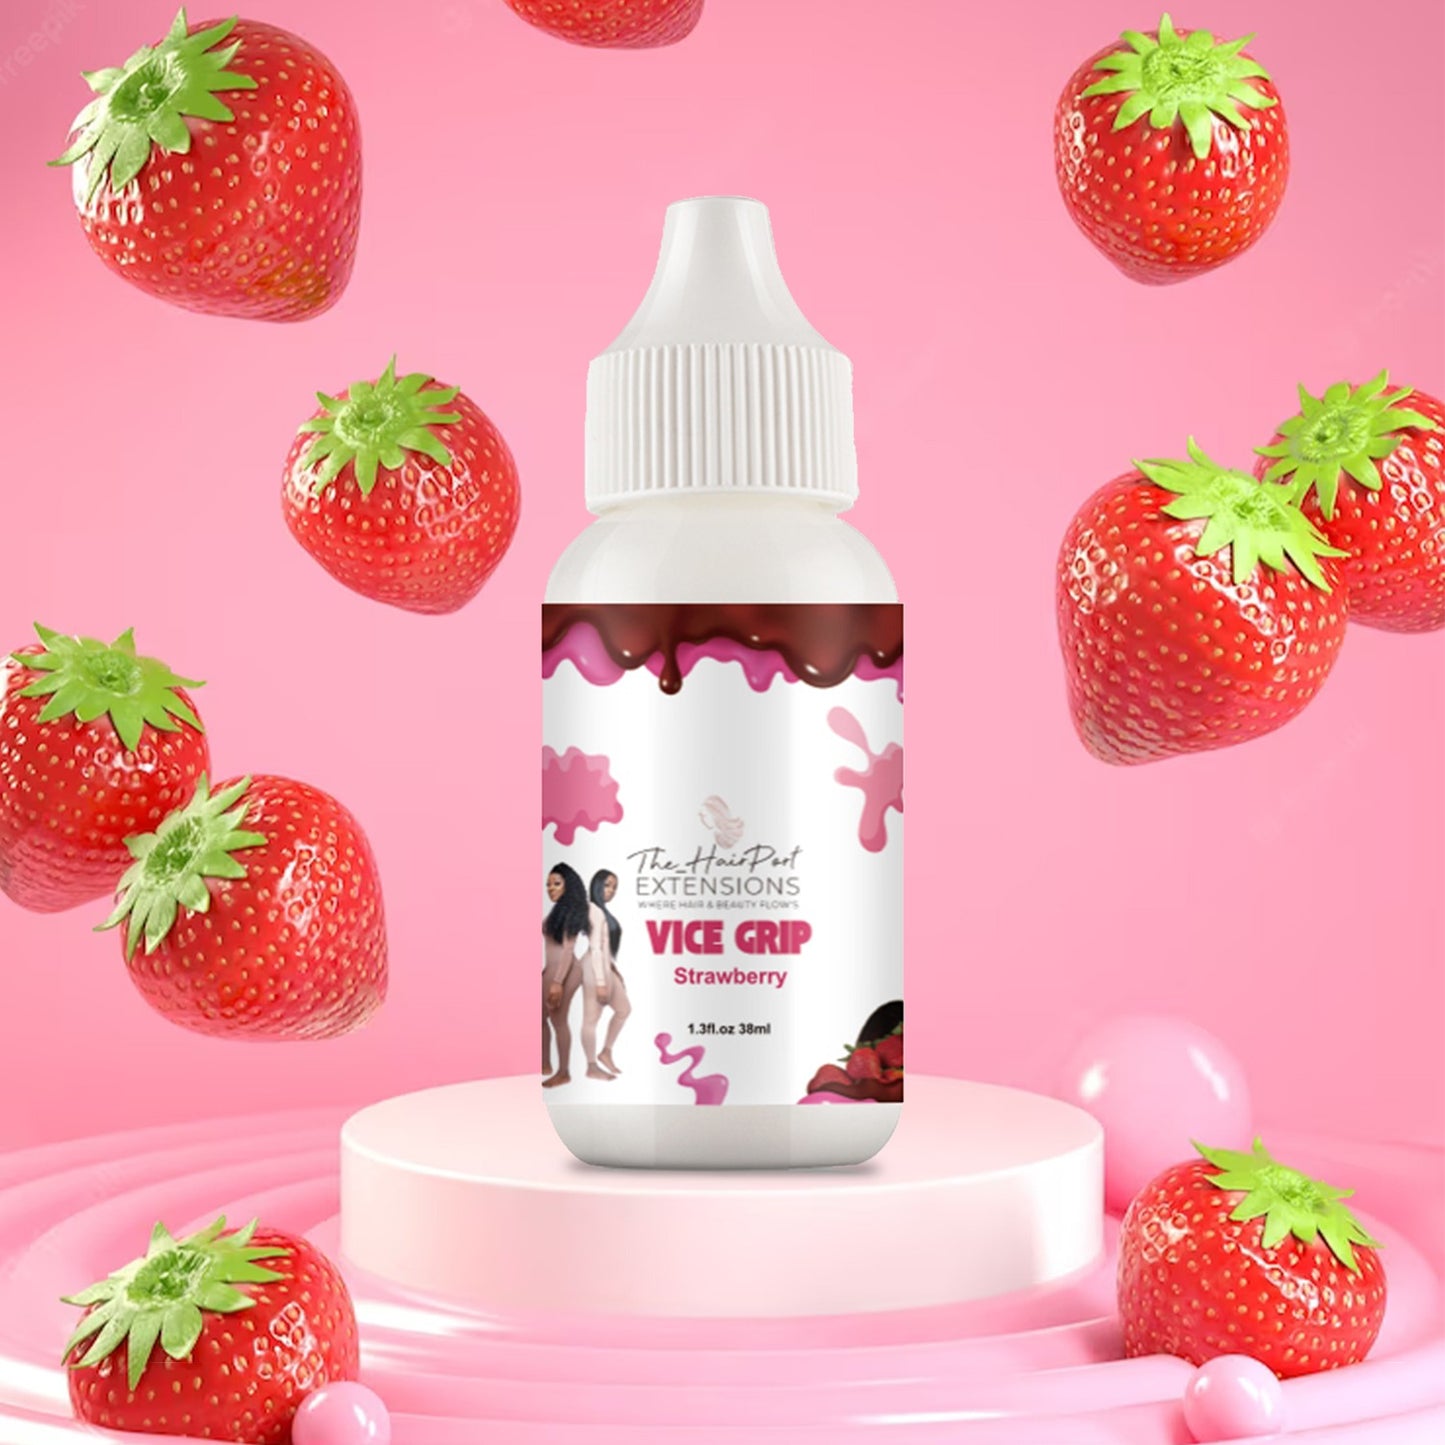 Vice grip/ Strawberry